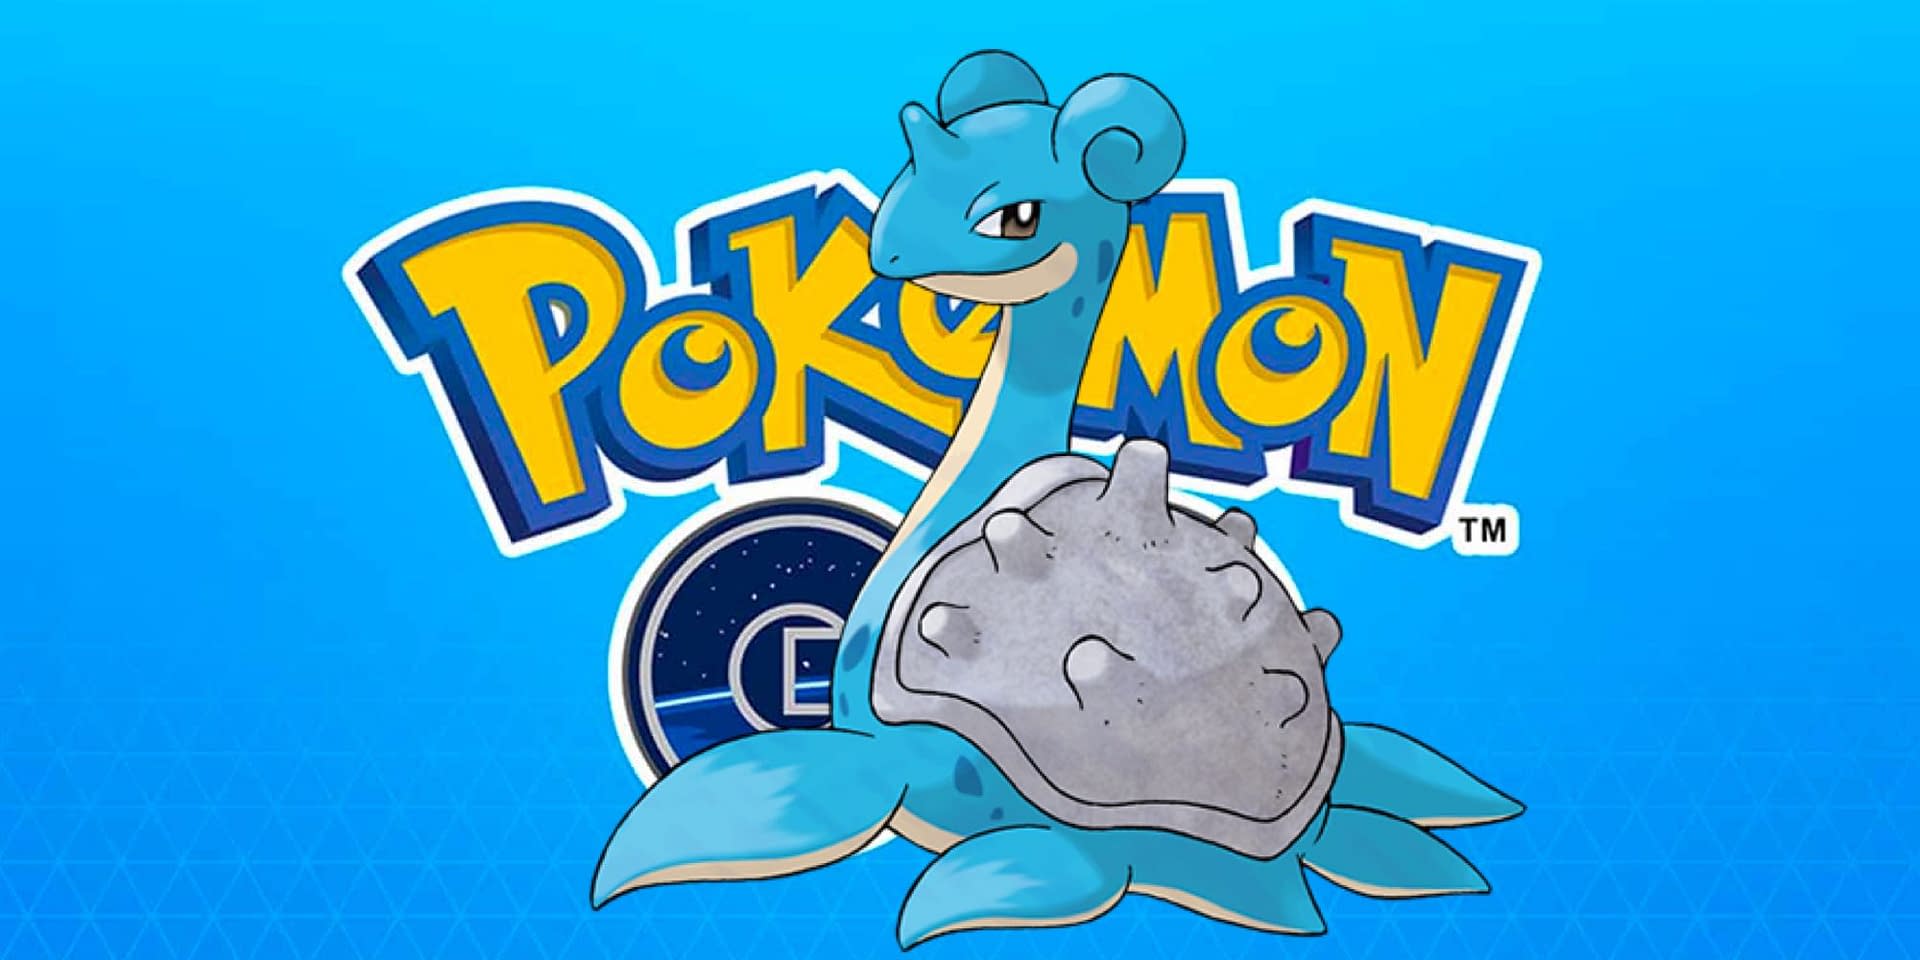 Pokémon Go' Shiny Bulbasaur: Niantic Twitter graphic sparks